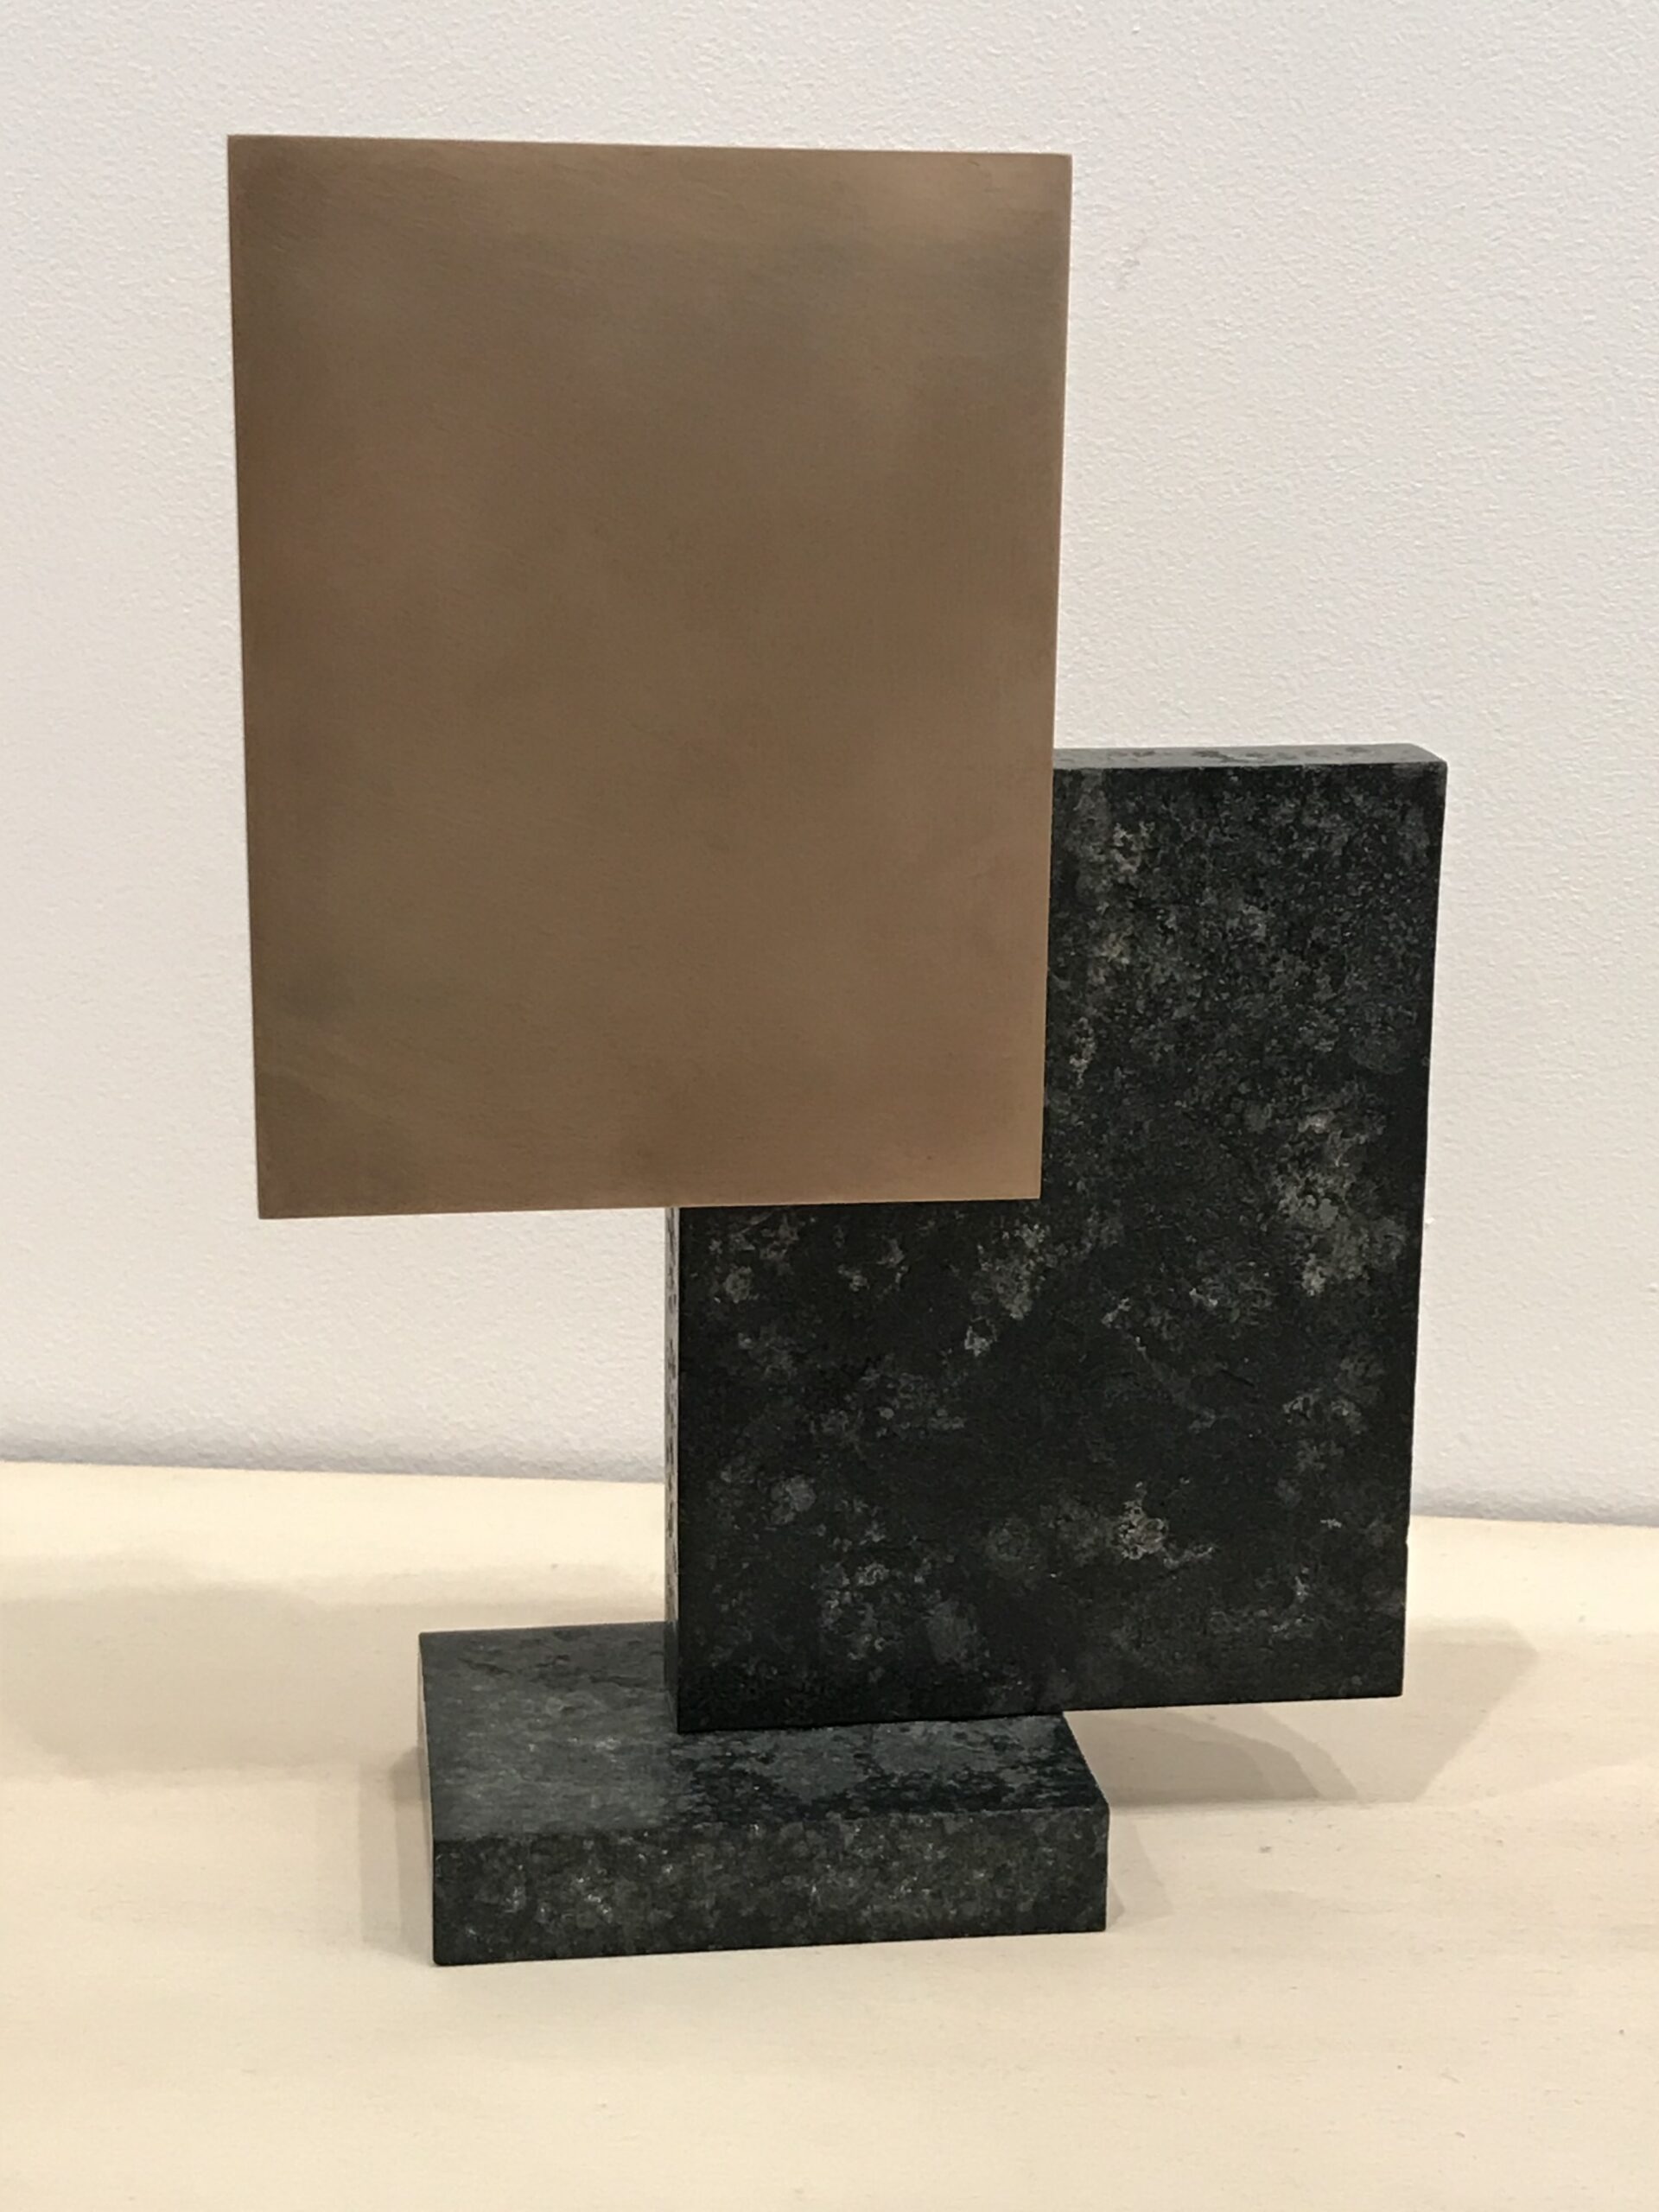 EA ST Verde ed20 25 2018 27x19x85cmBronze and german granite scaled Pigment Gallery Galería de Arte en Barcelona ST verde